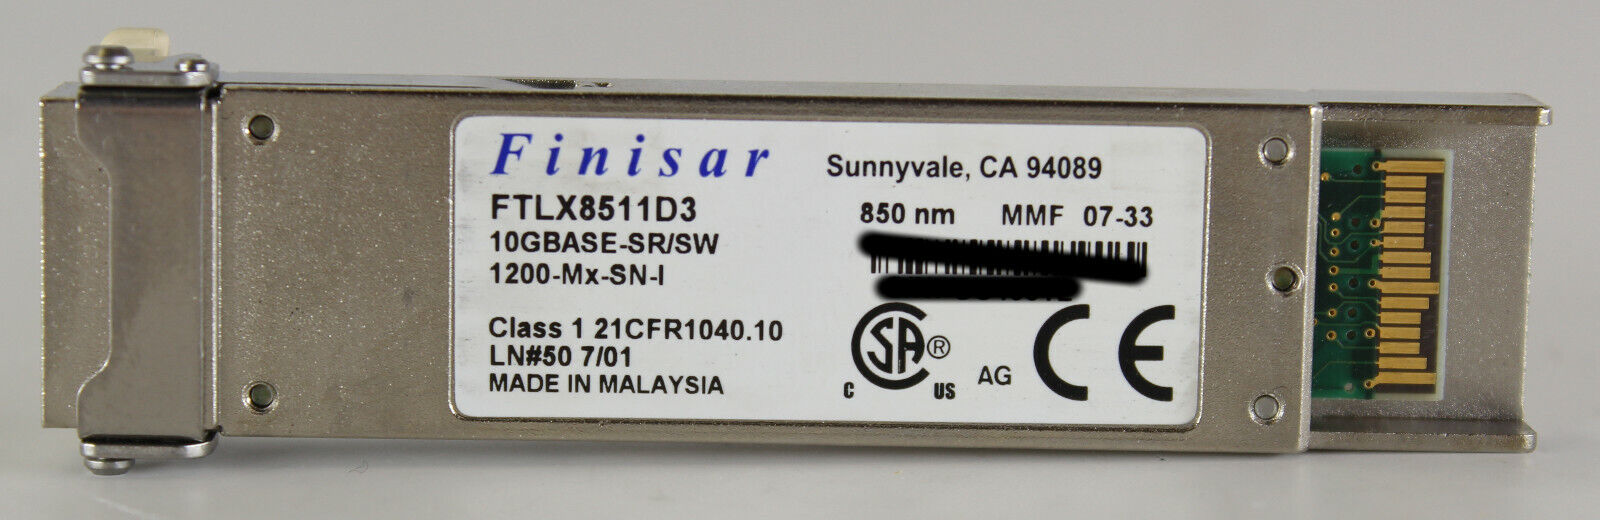 Lot of 6 Finisar FTLX8511D3 10GBASE SR/SW 850nm Transceiver Module 1200-Mx-SN-I